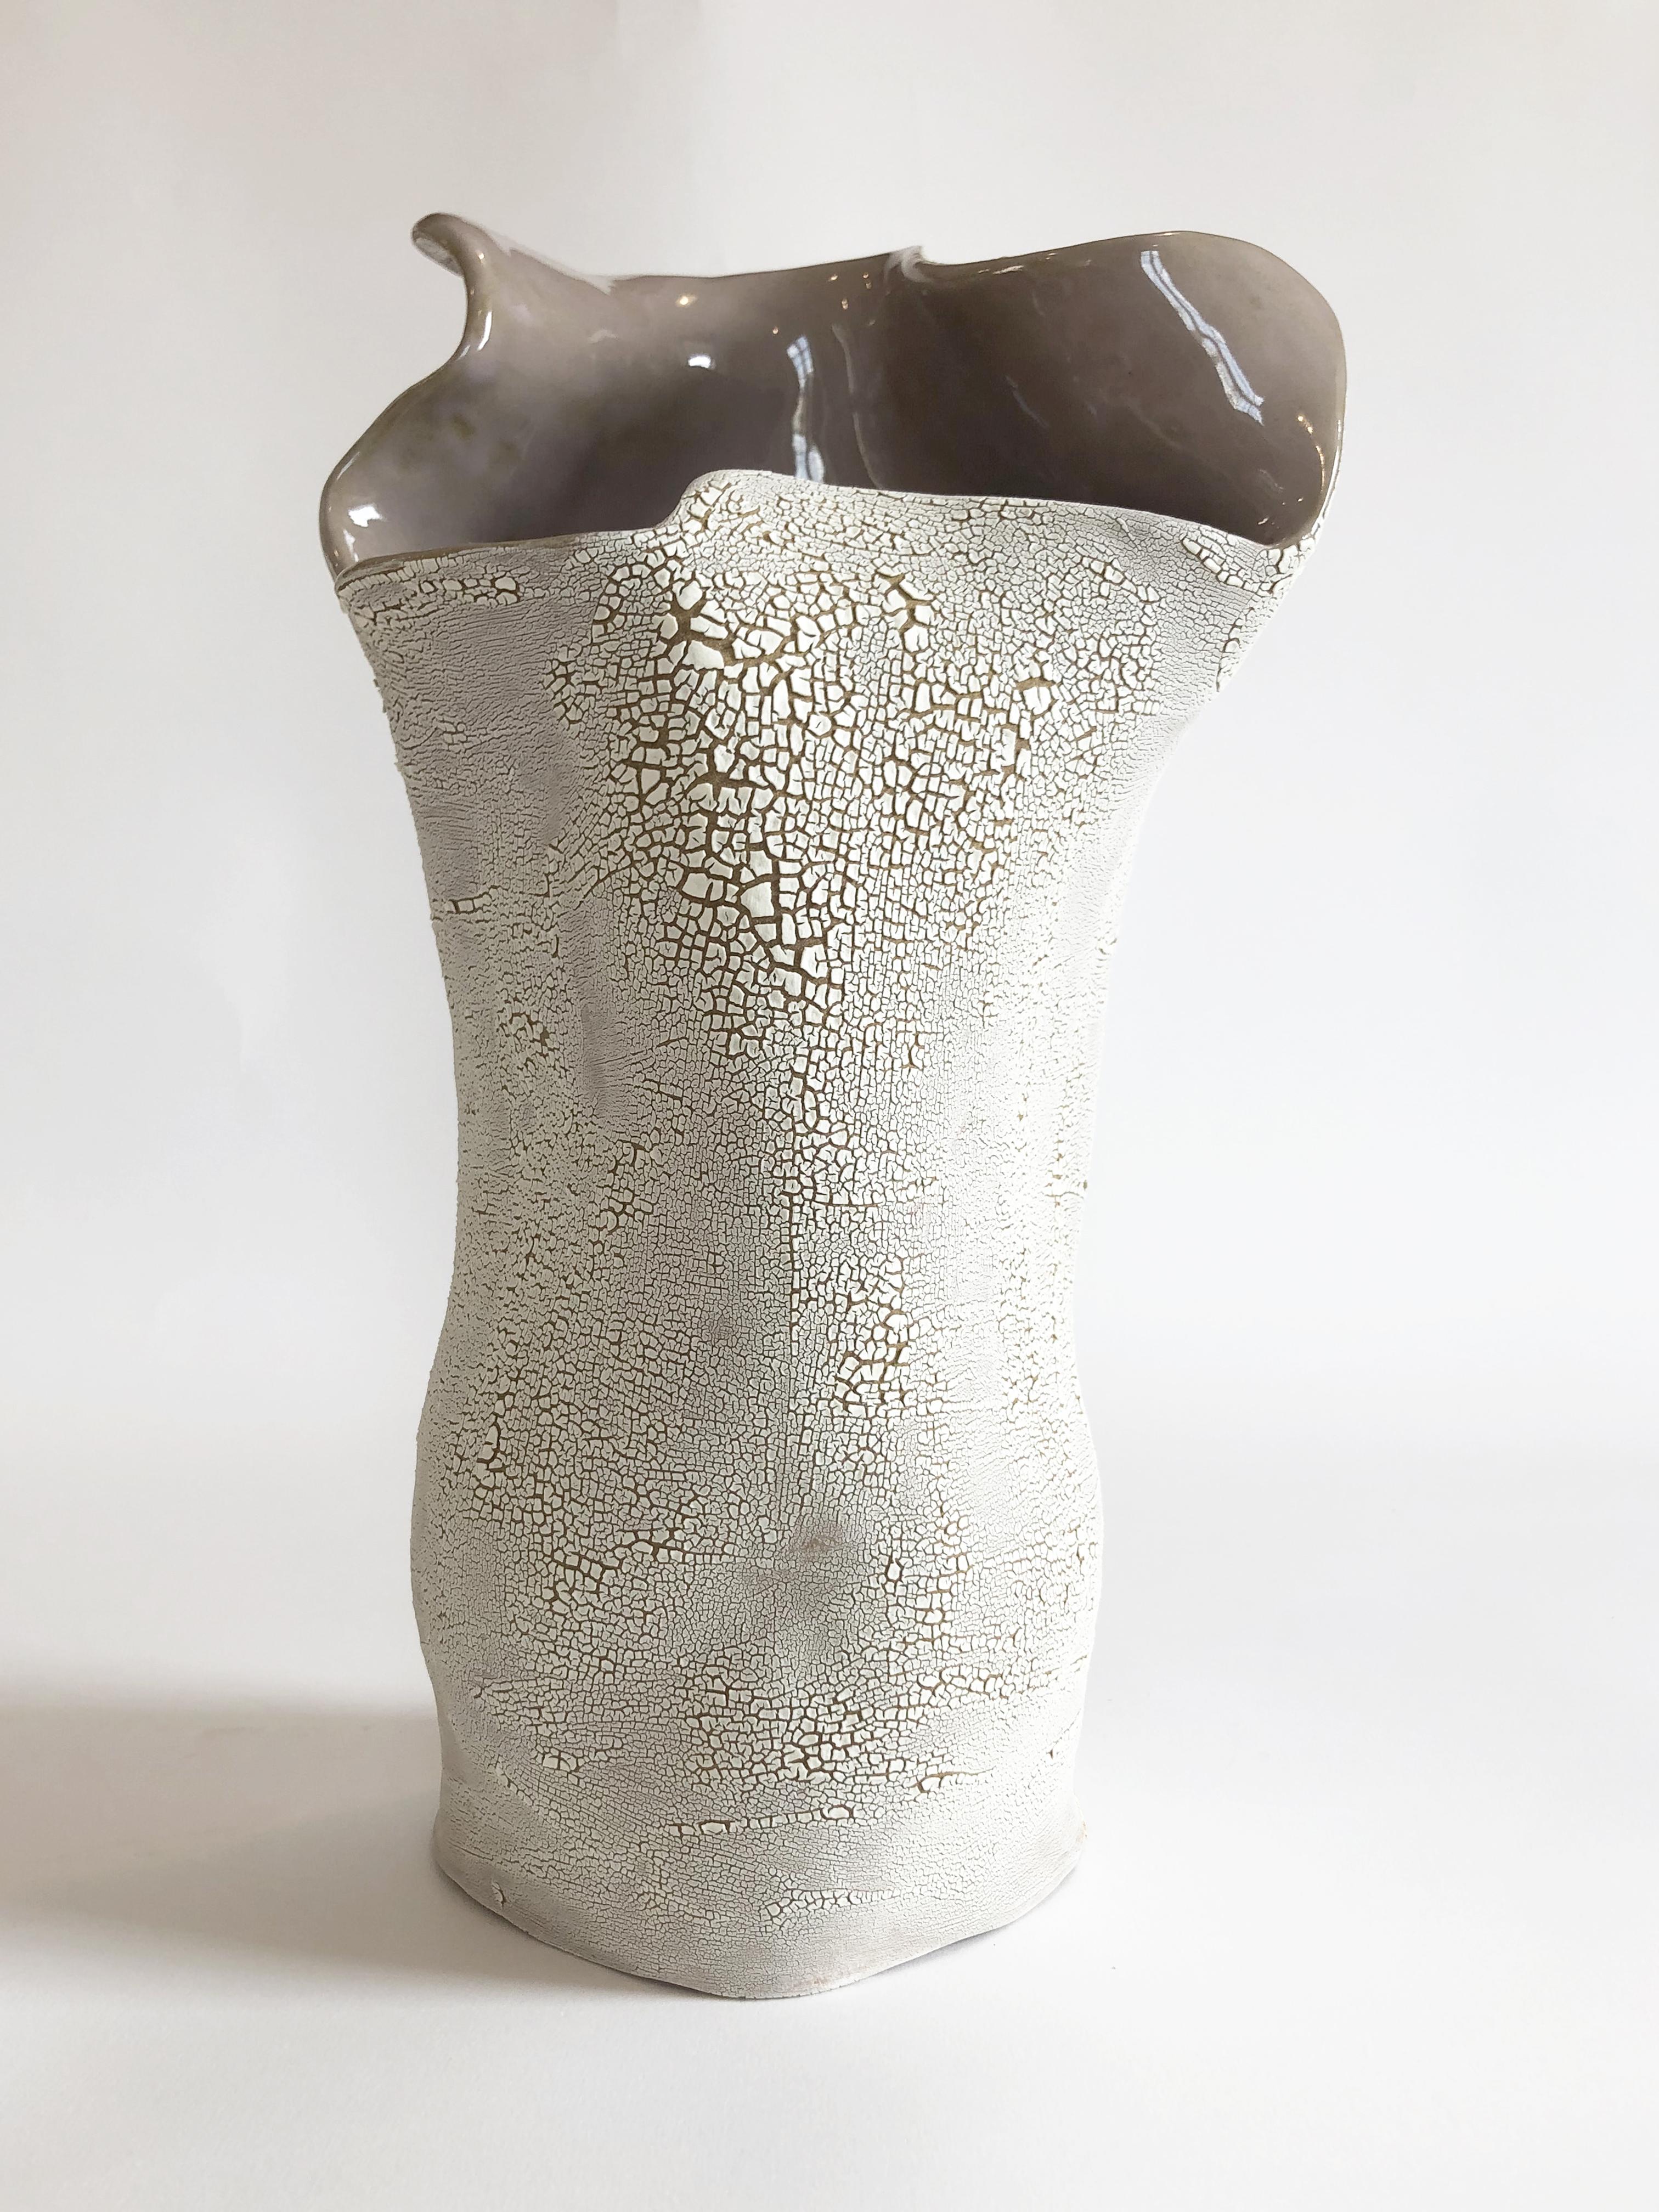 Visceral V. Glaze ceramic sculpture - Sculpture by Magda Von Hanau